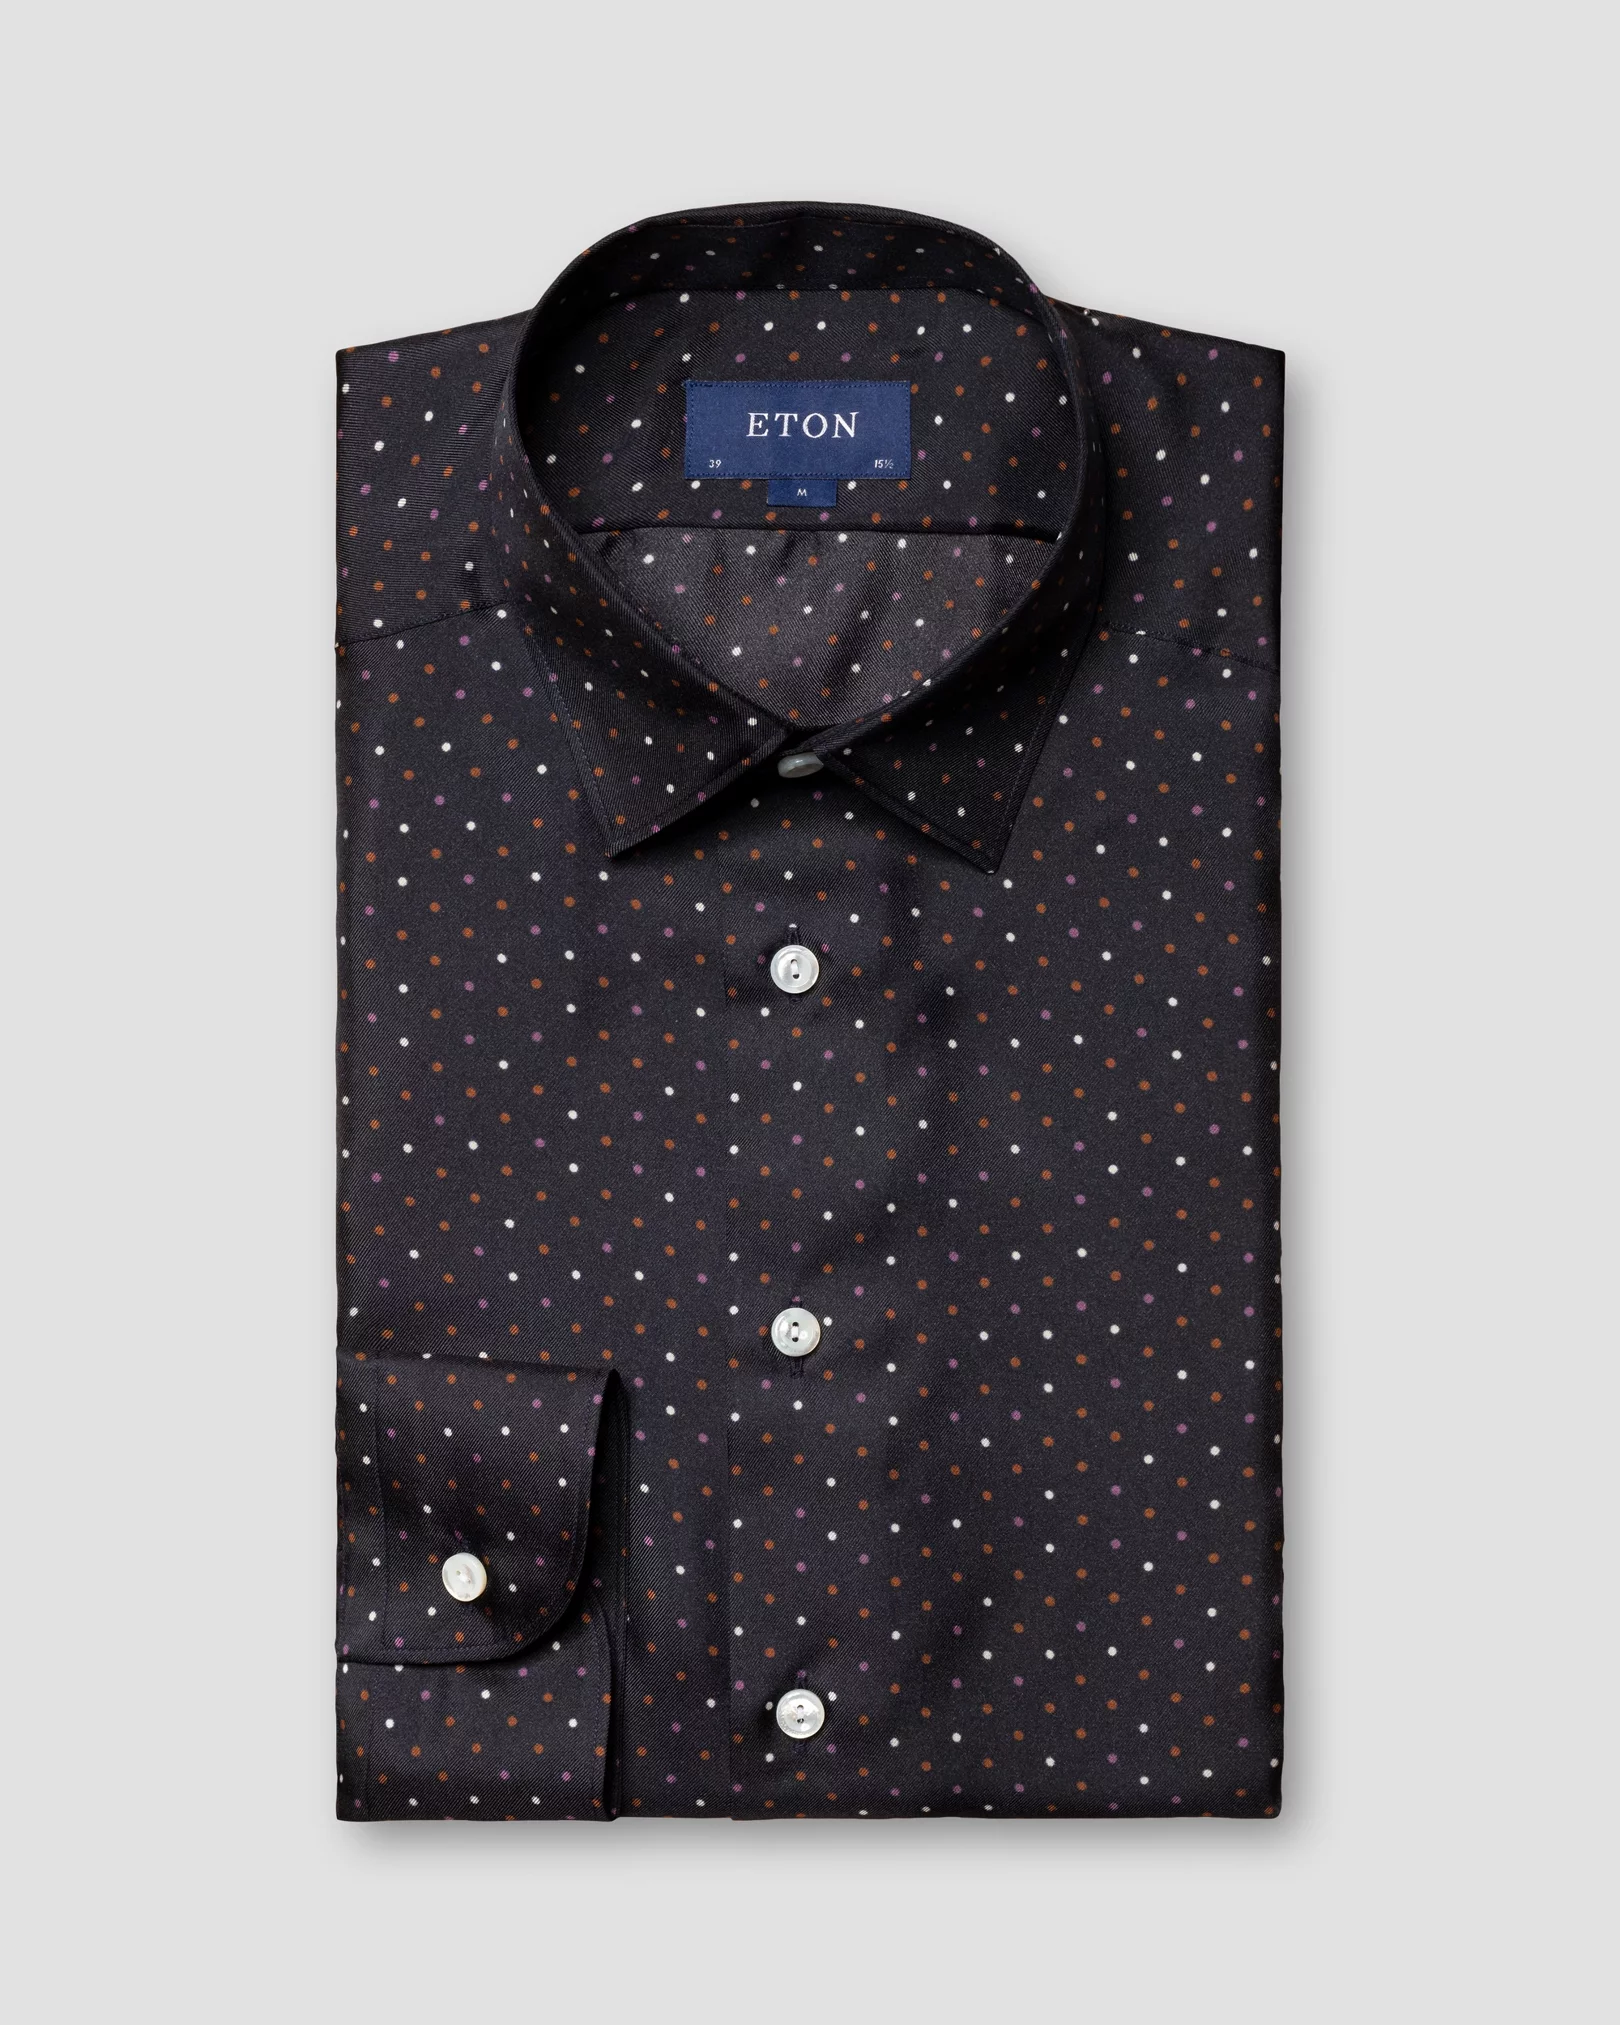 Eton - black silk twill shirt polka dots pointed single rounded slim soft